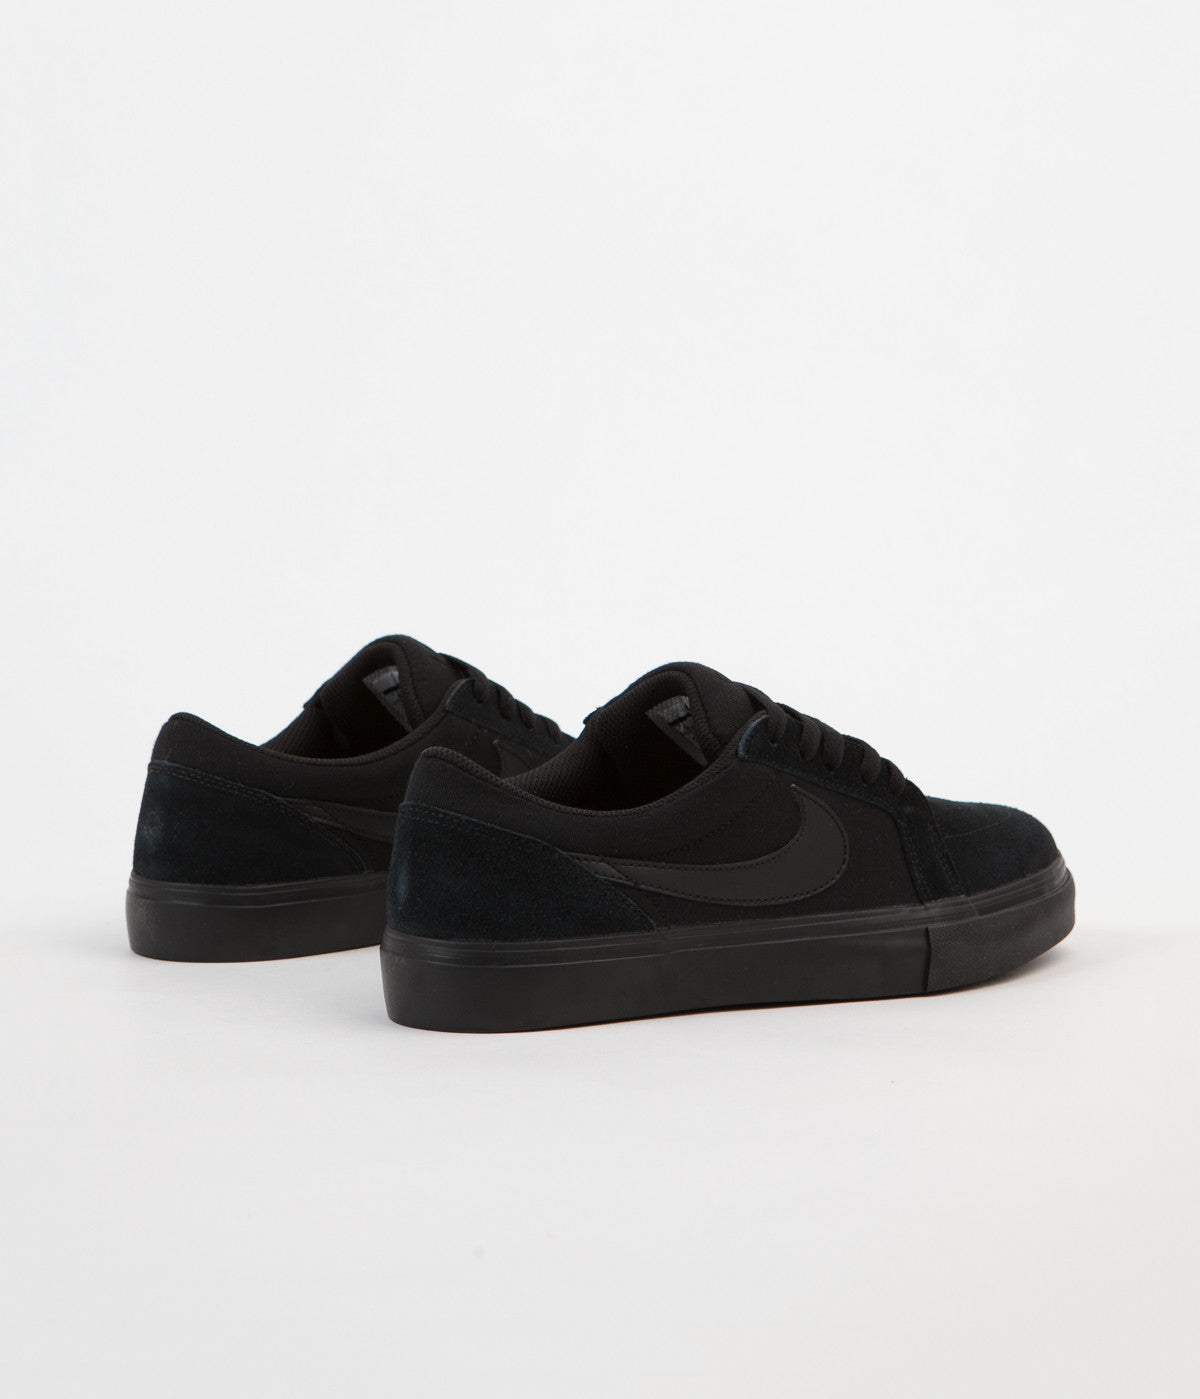 Nike SB Satire II Shoes - Black / Black 